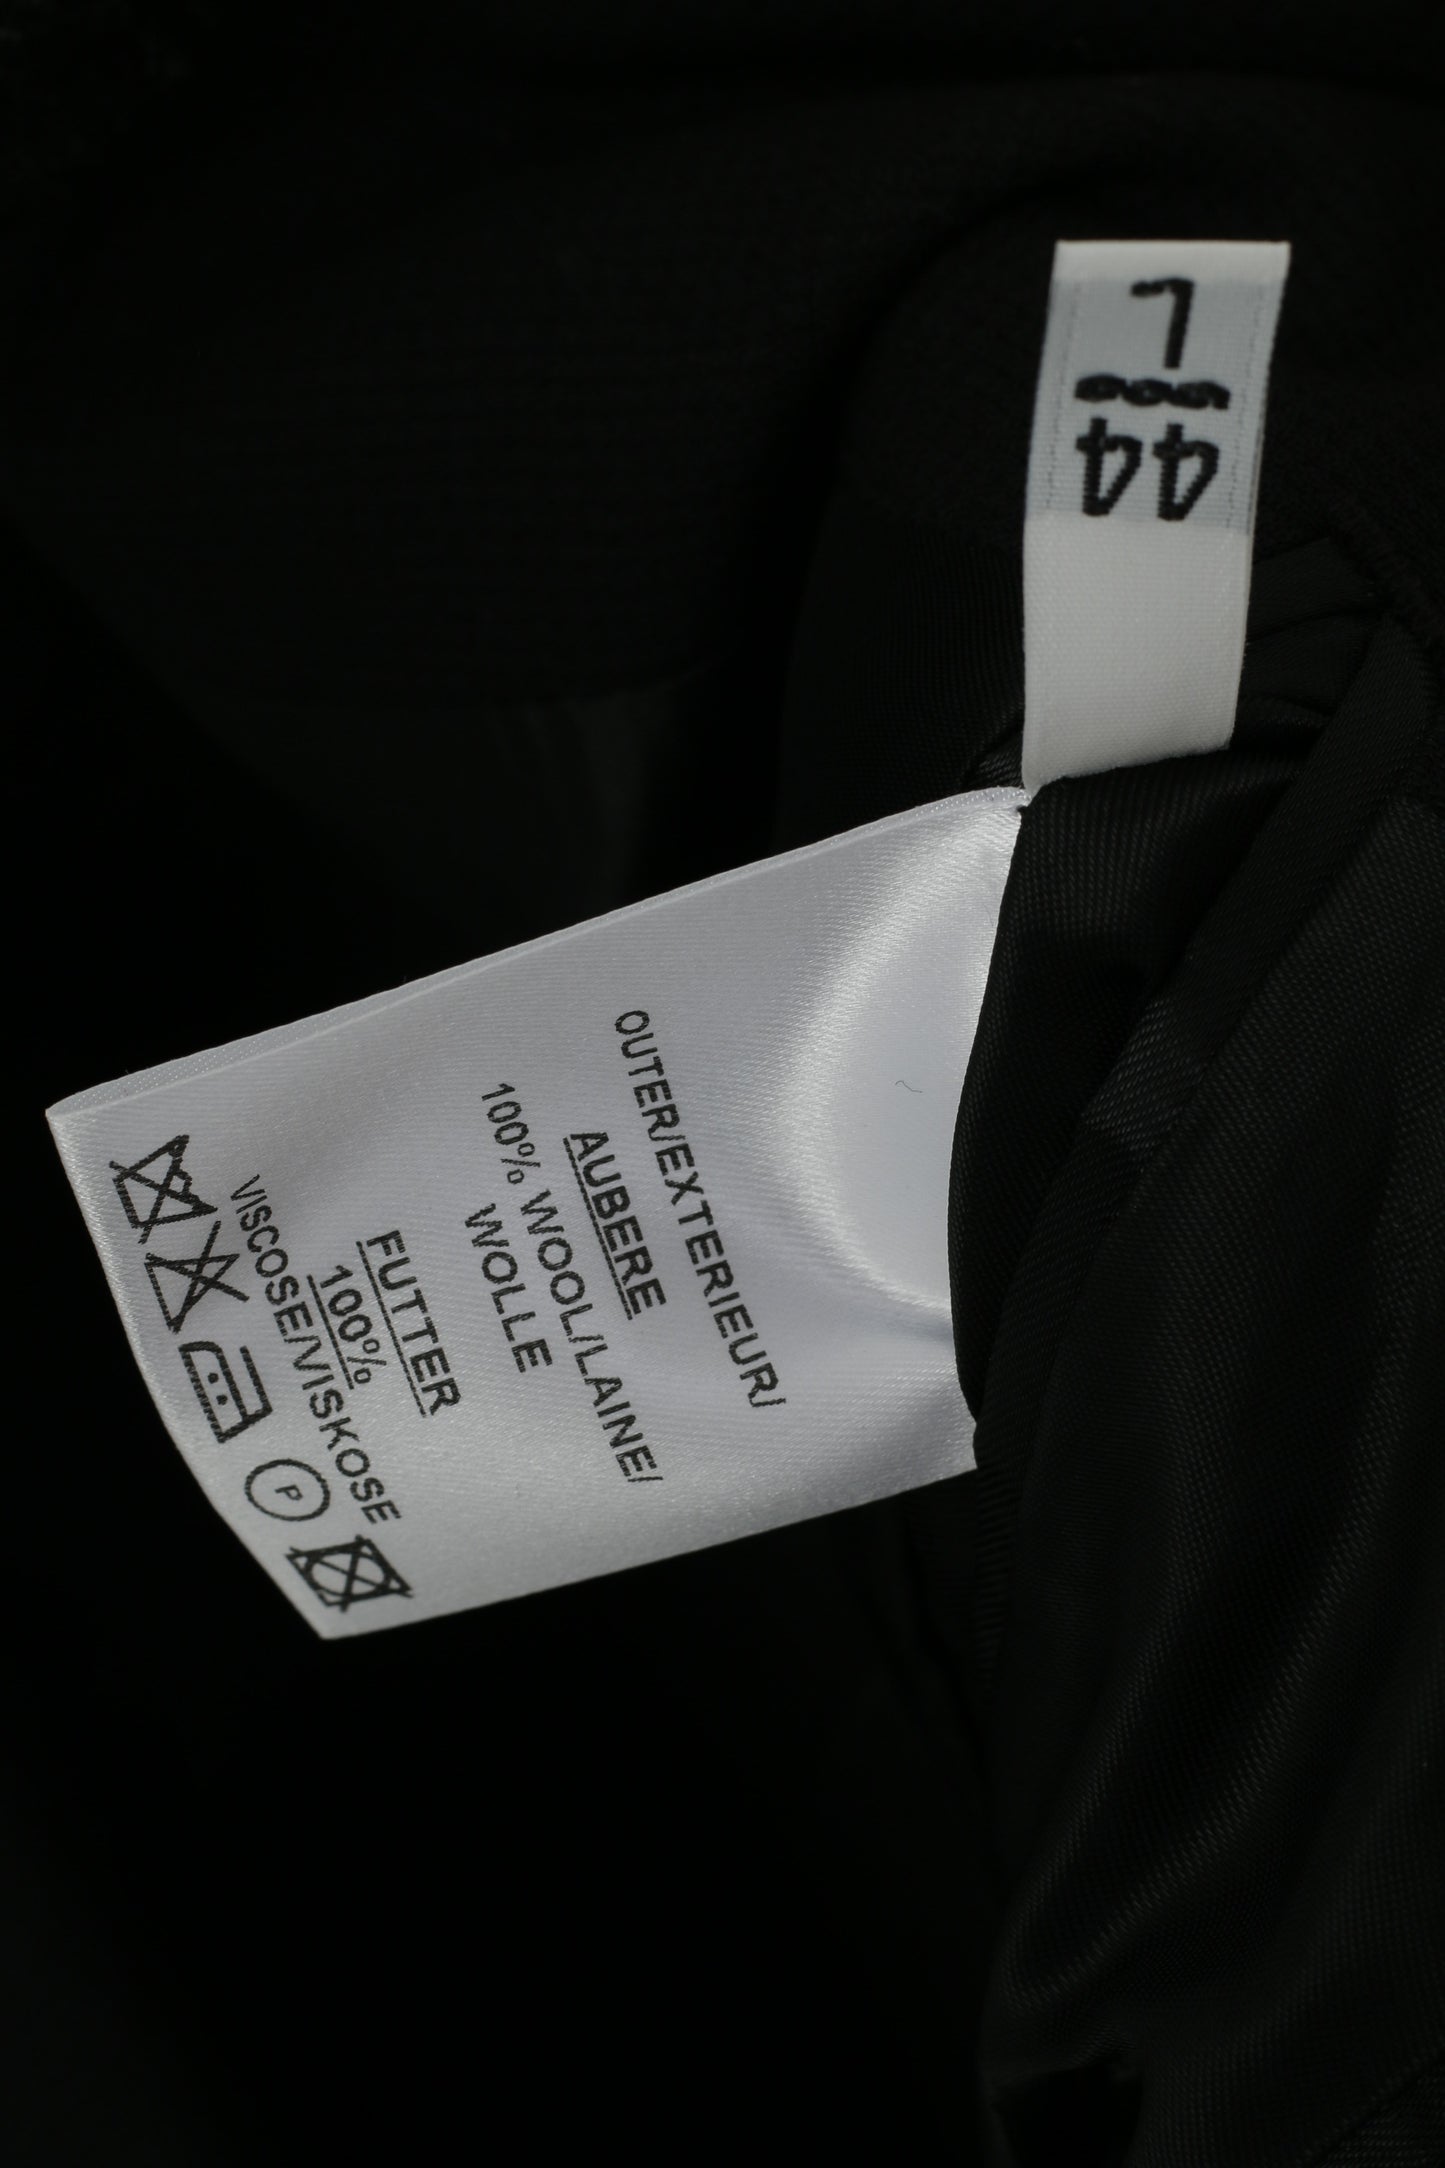 Fellini Men 44 L Blazer Black Wool Mini Check Classic Single Breasted Jacket